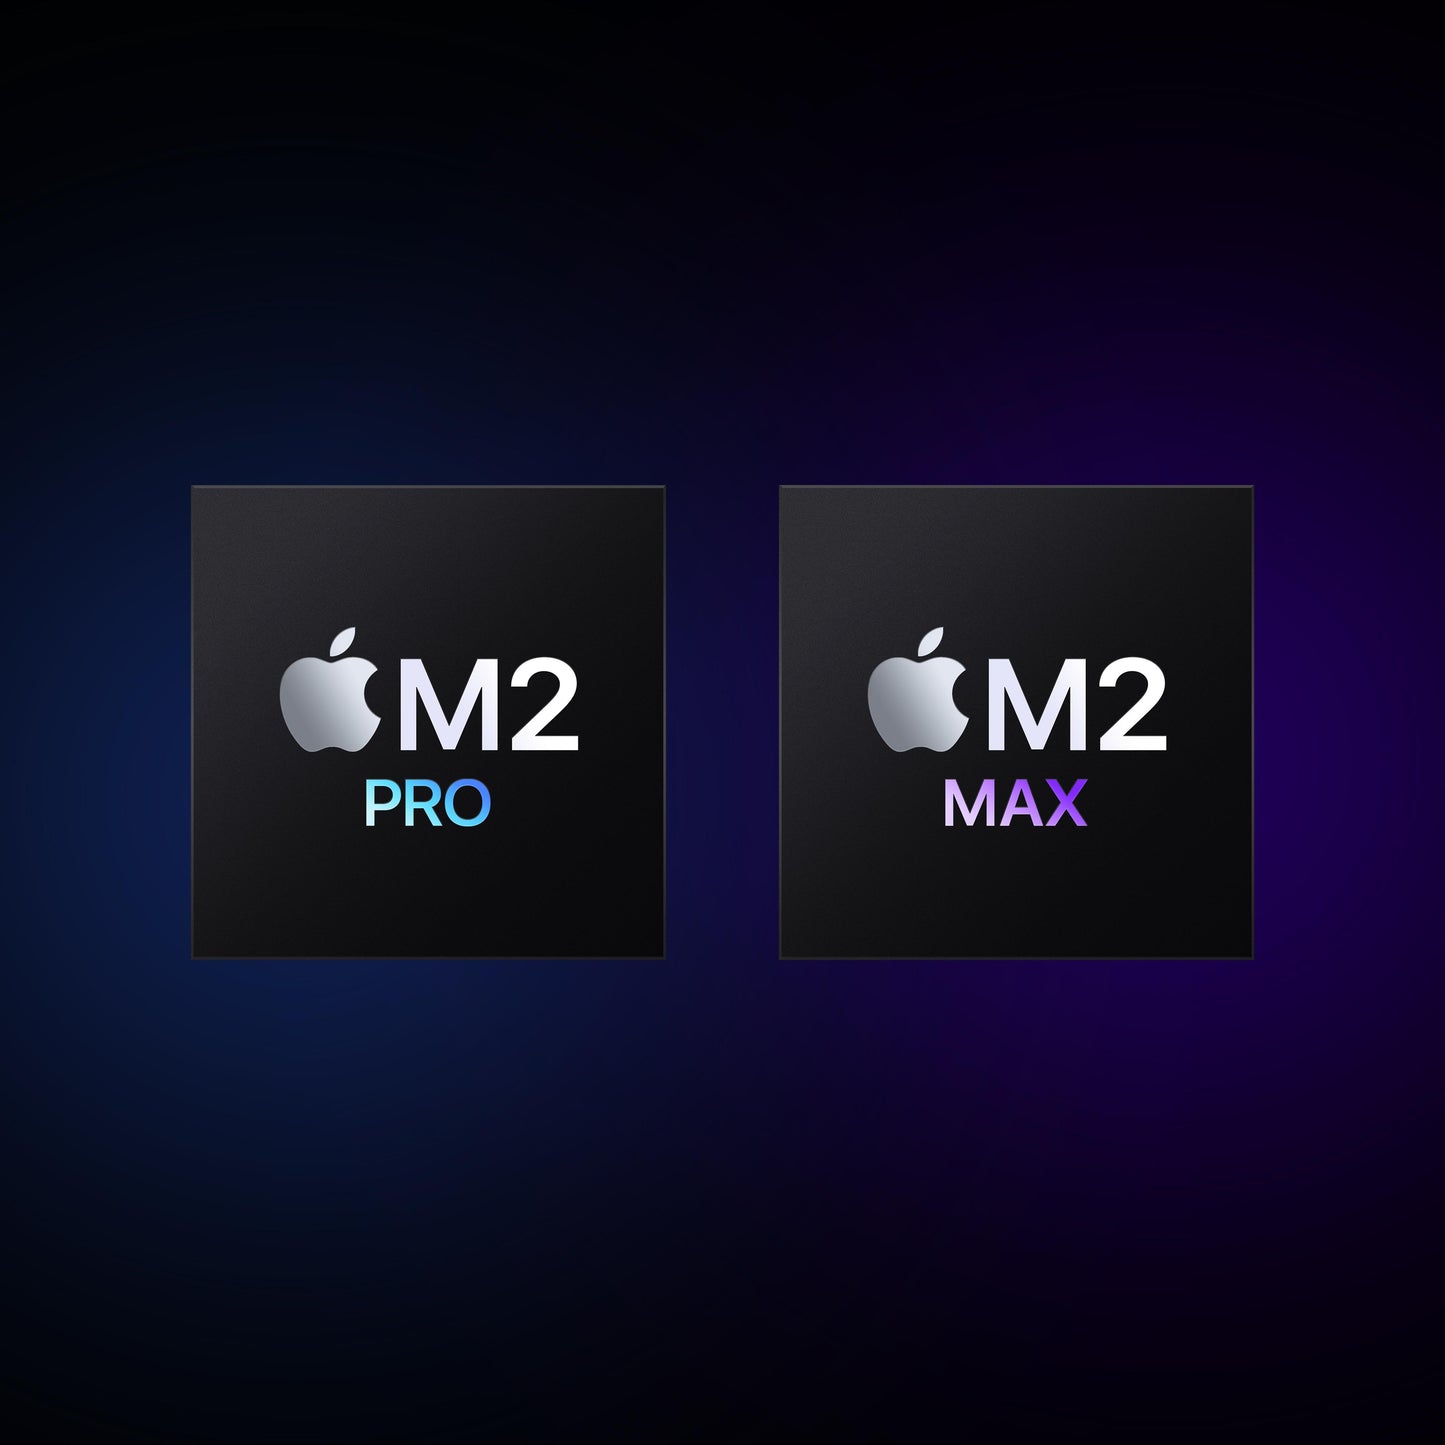 "14-inch MacBook Pro: Apple M2 Max chip with 12-core CPU and 30-core GPU, 1TB SSD - Silver"